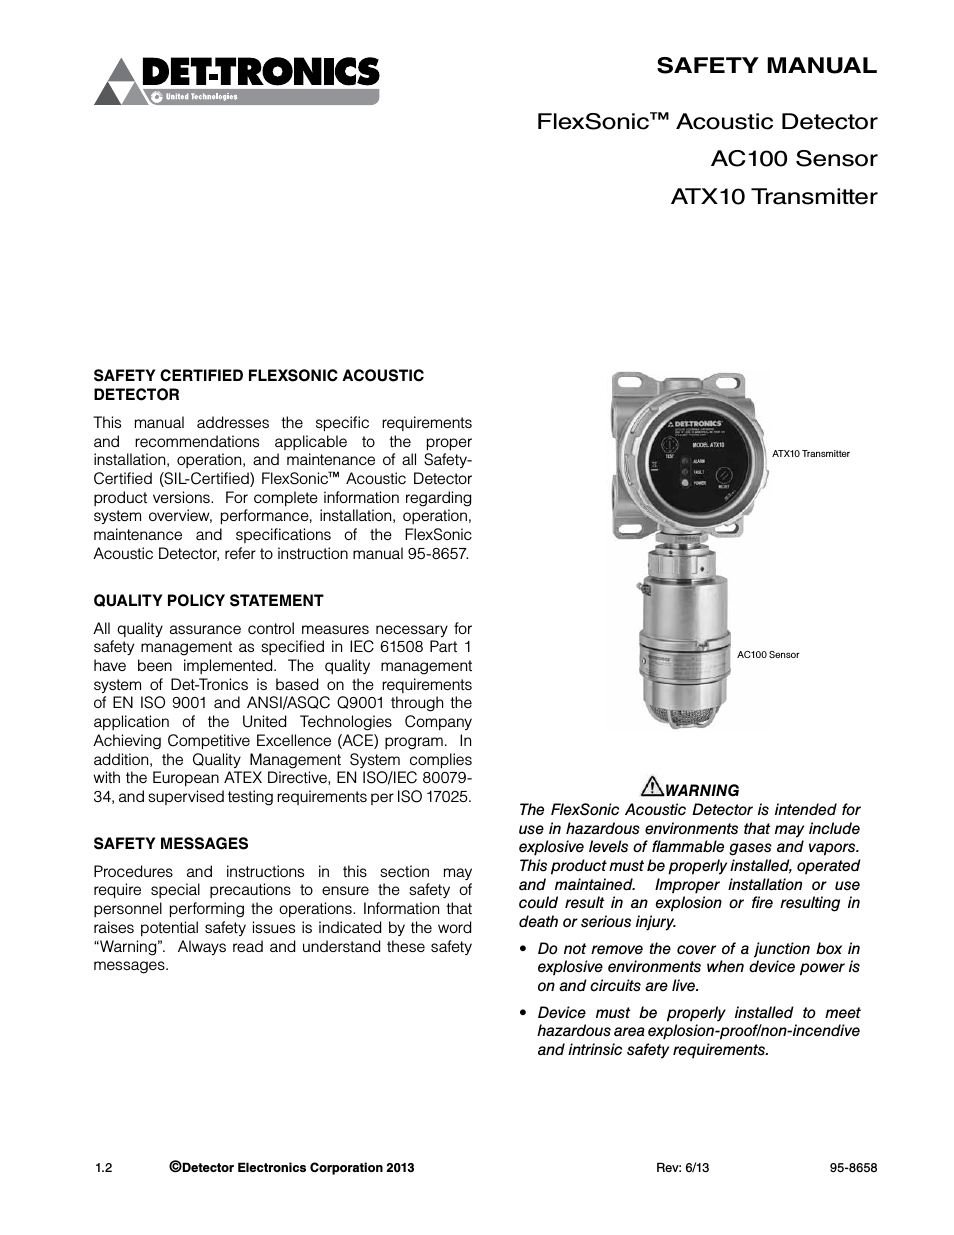 AC100 Sensor SAFETY MANUAL